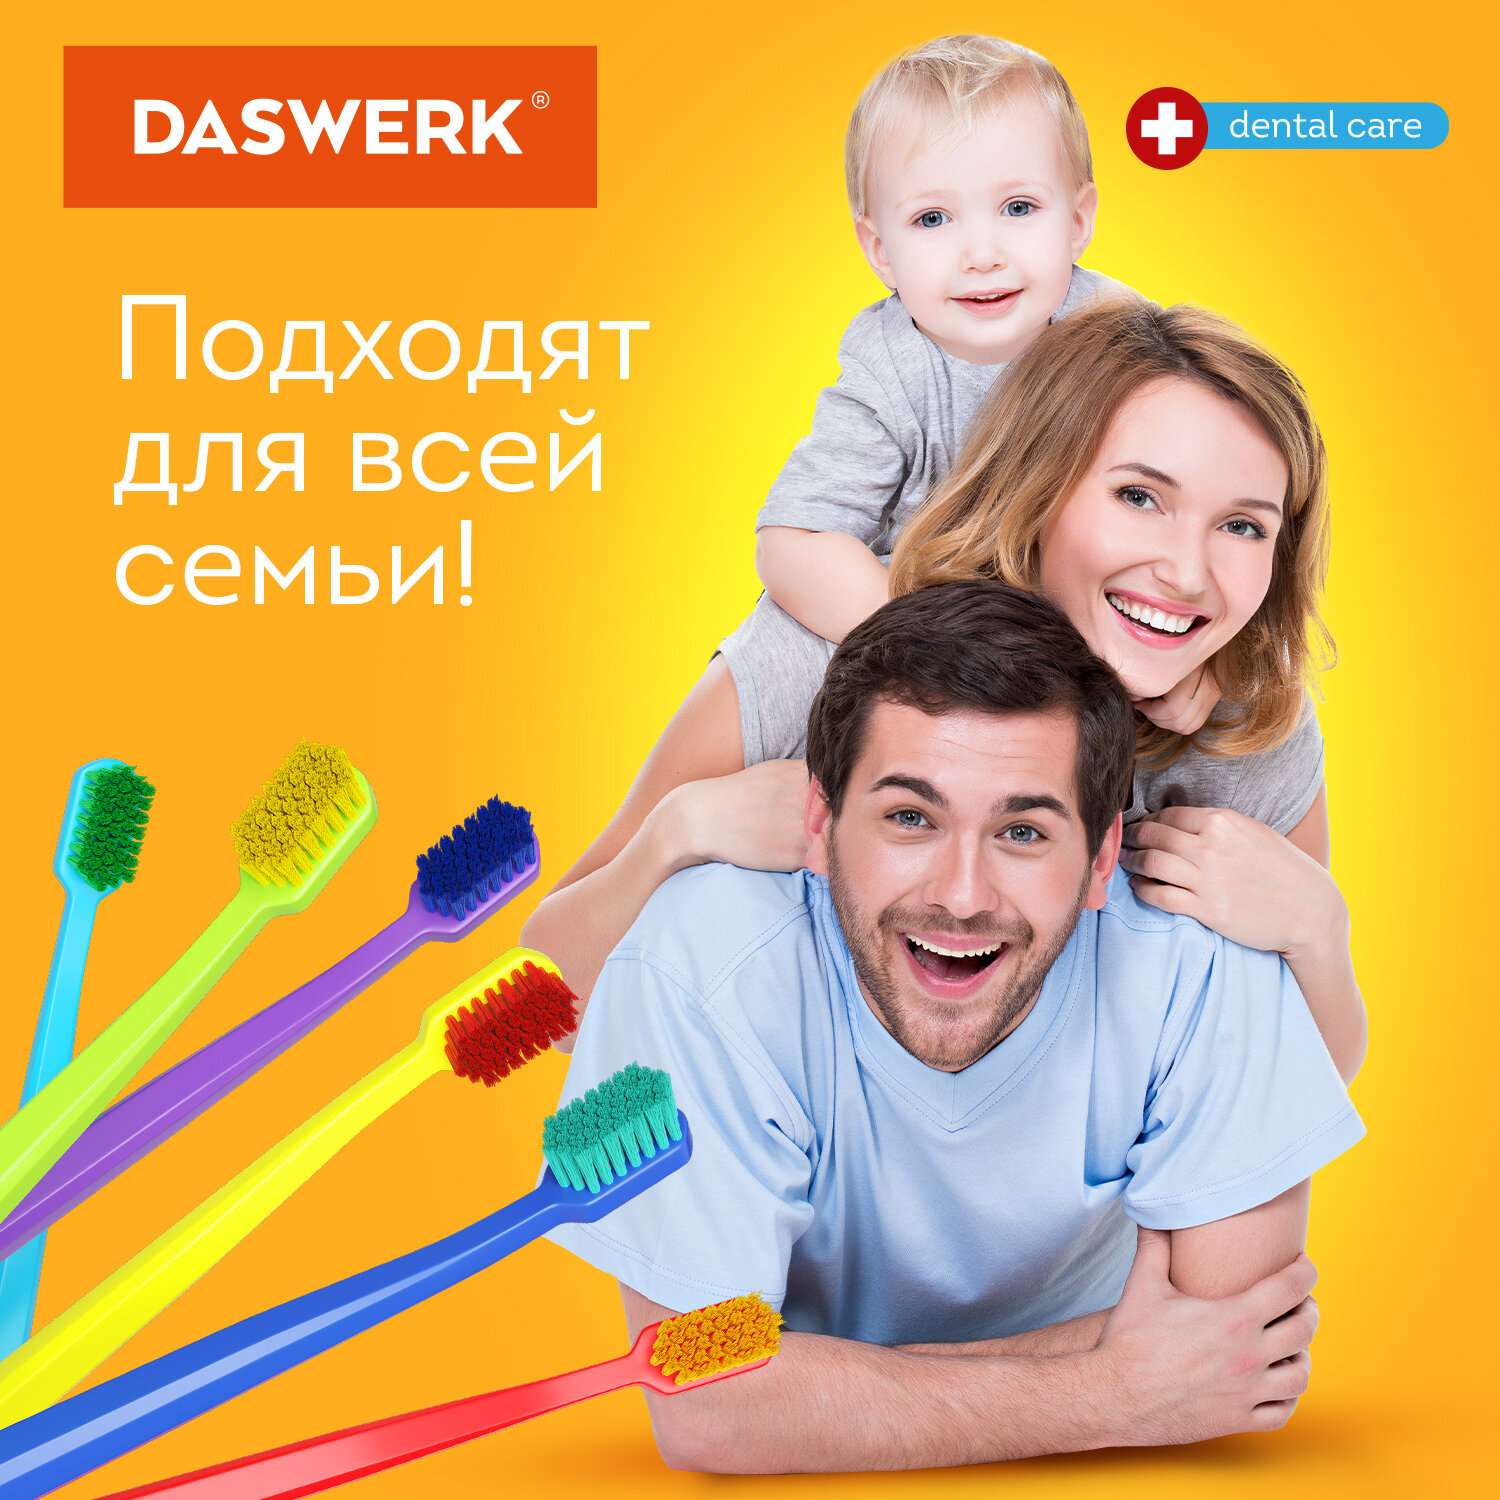 Зубная щетка DASWERK мягкая/средней жесткости для зубов набор 10 штук - фото 7